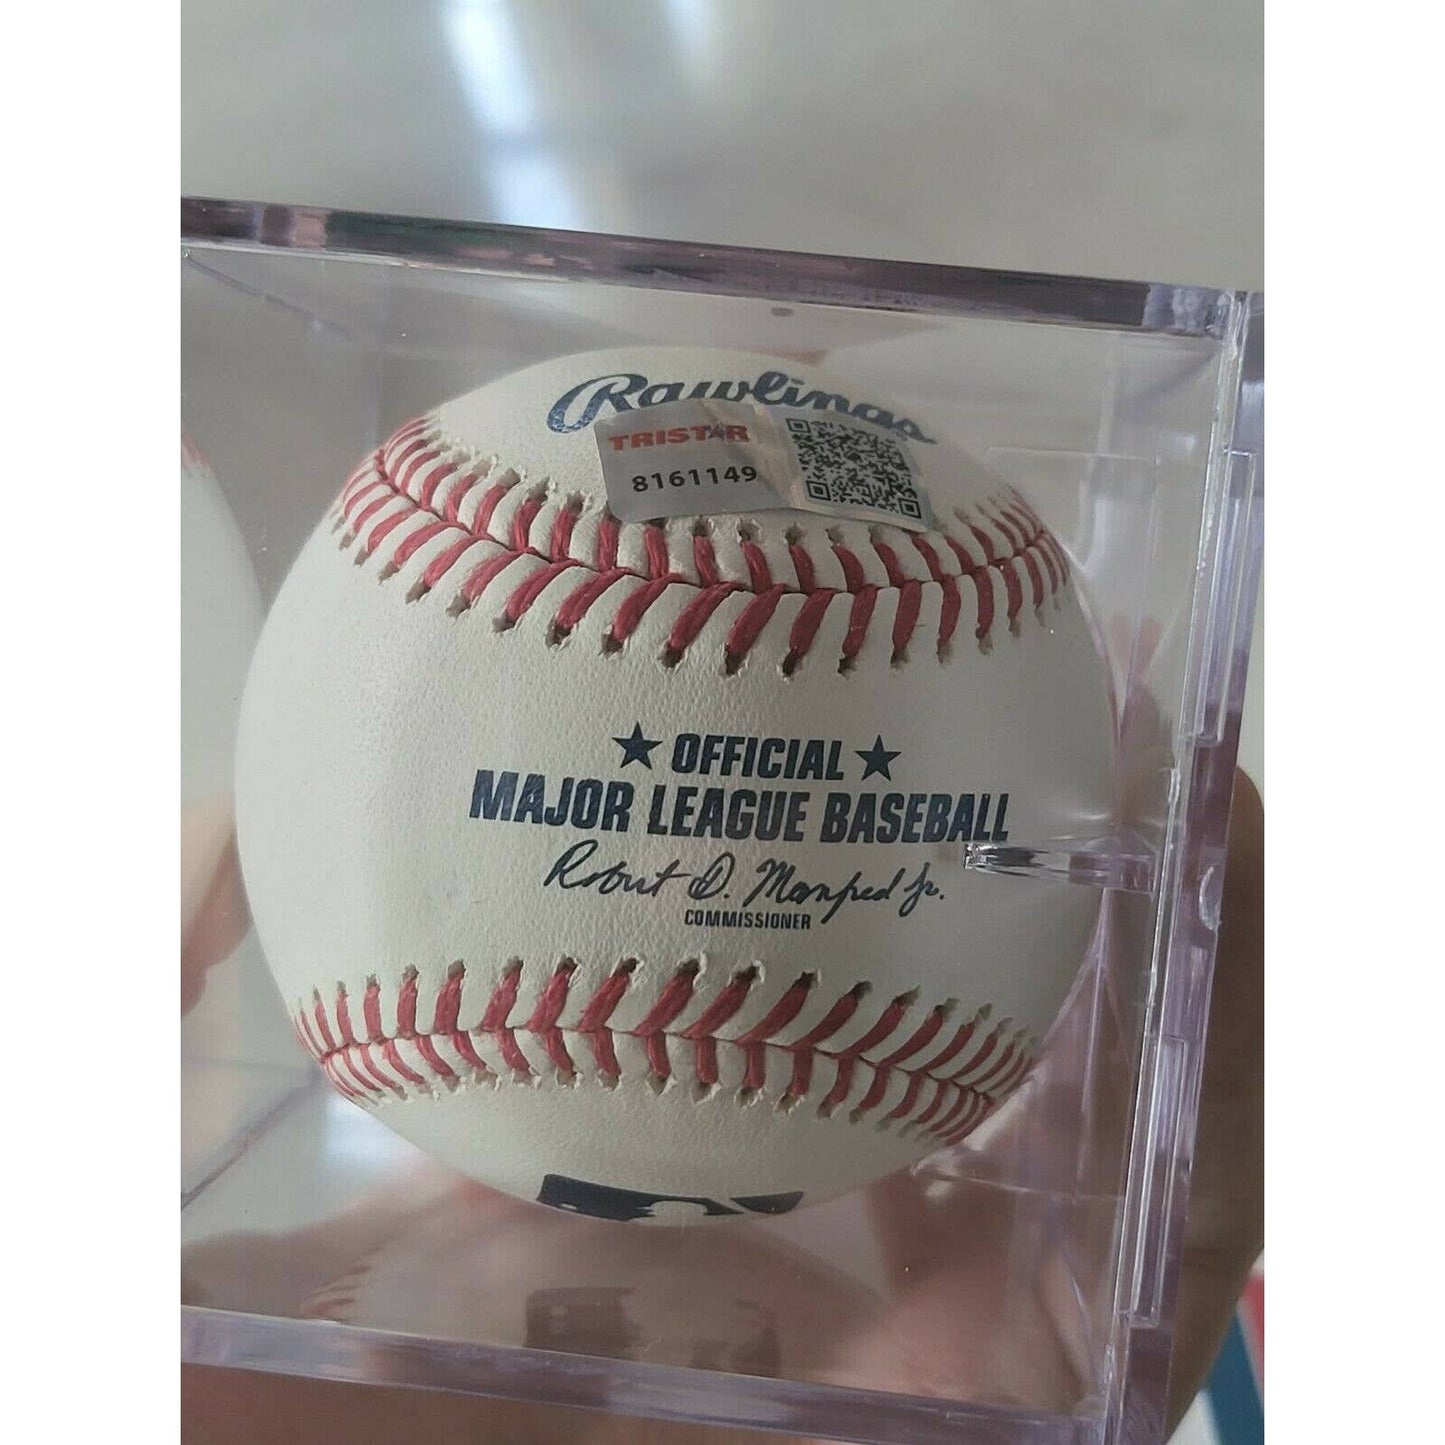 Bob Horner Autographed/Signed Baseball TRISTAR 78 NL ROY - TreasuresEvolved